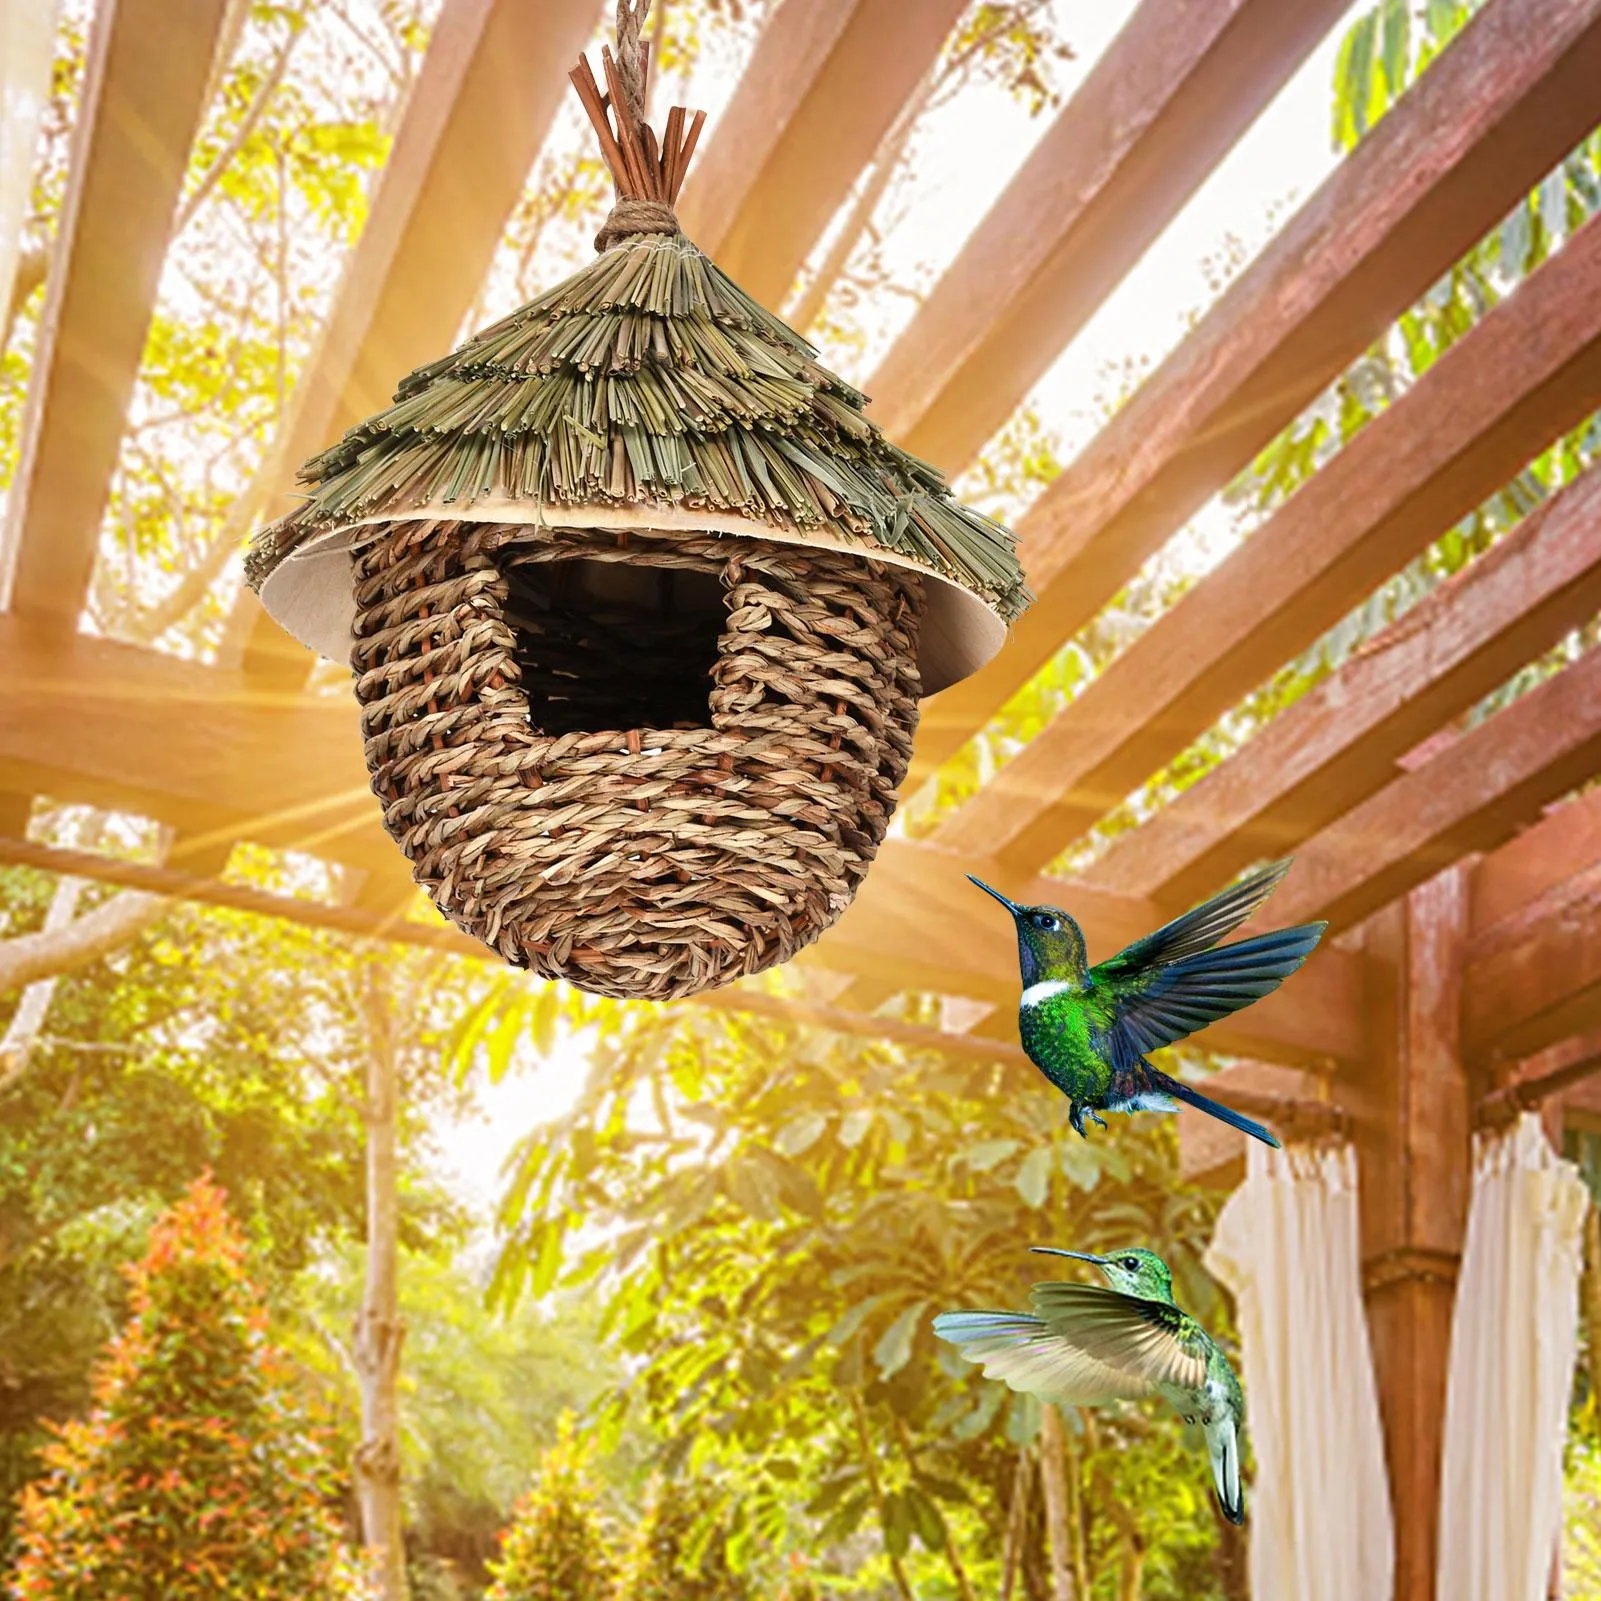 Leathercraft Charming Decorative Hummingbird House Handwoven Hung Straw Nest Natural Grass Hung Bird for Garden Patio Lawn Office Indoor